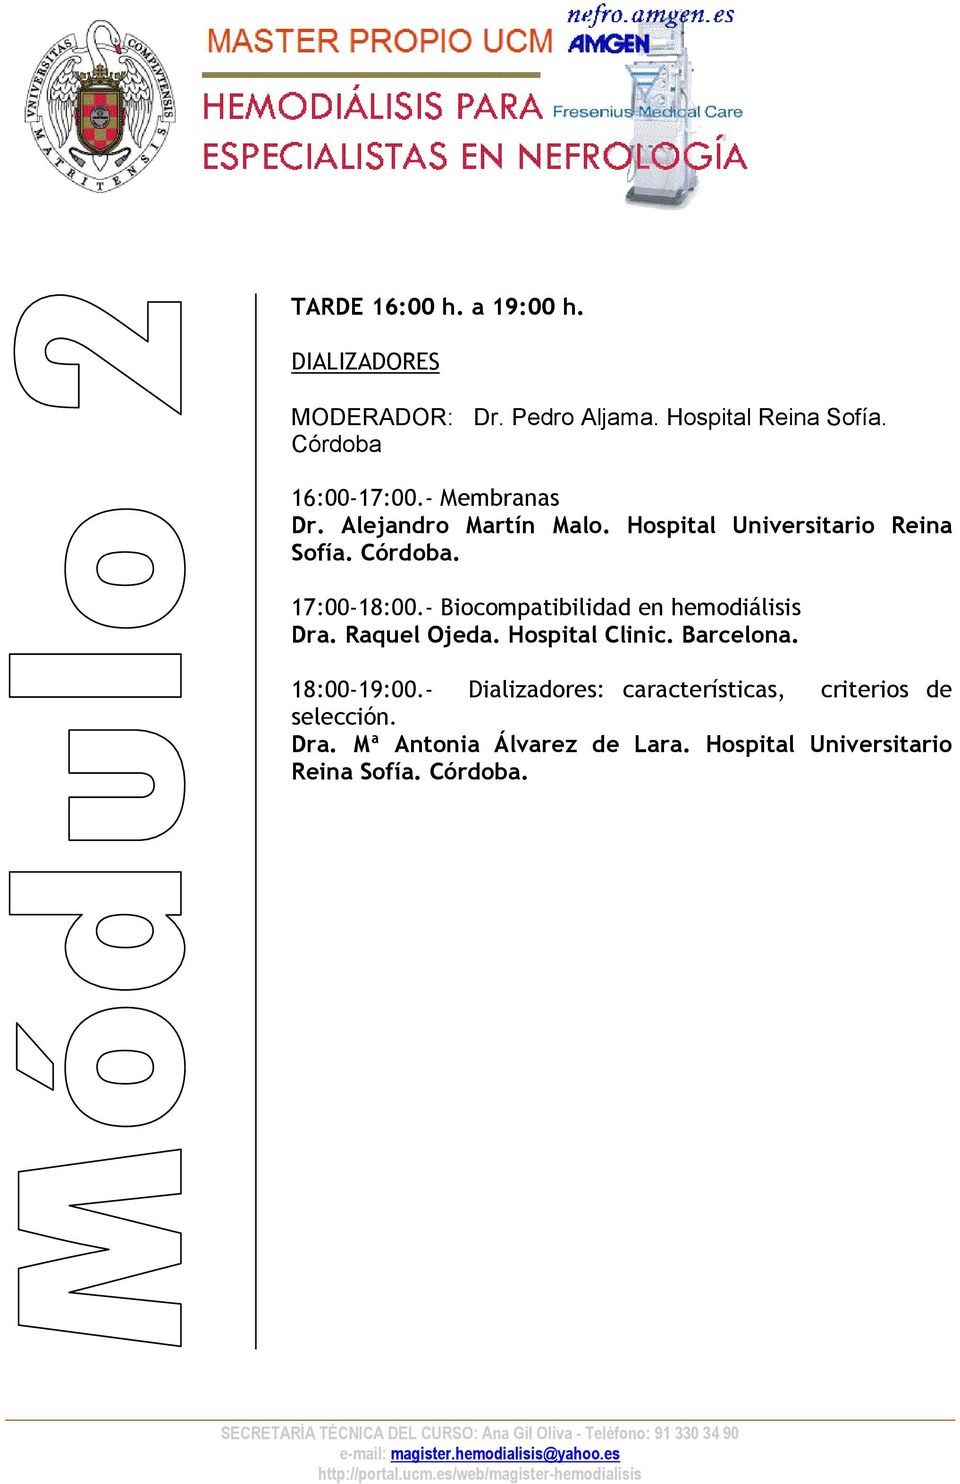 17:00-18:00.- Biocompatibilidad en hemodiálisis Dra. Raquel Ojeda. Hospital Clinic. Barcelona. 18:00-19:00.